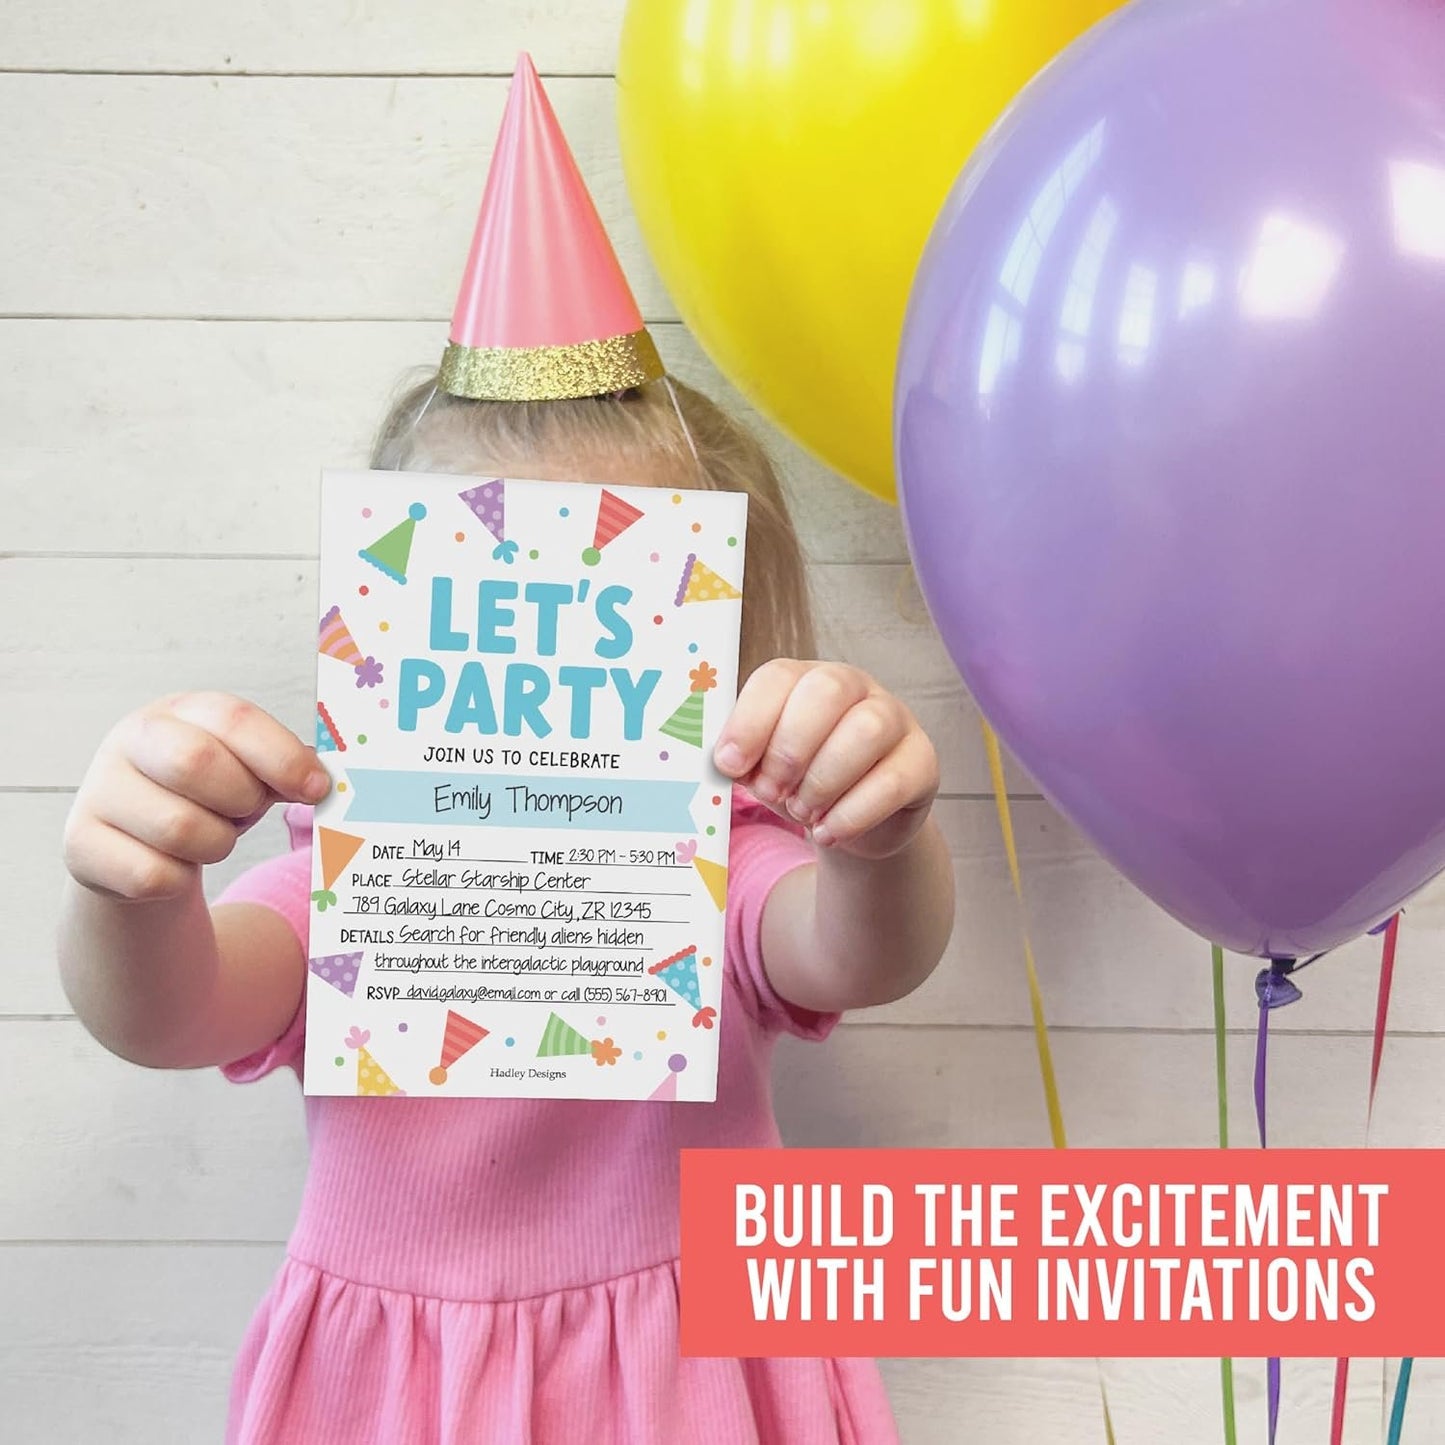 Balloon Doodle Kids' Party Invitation